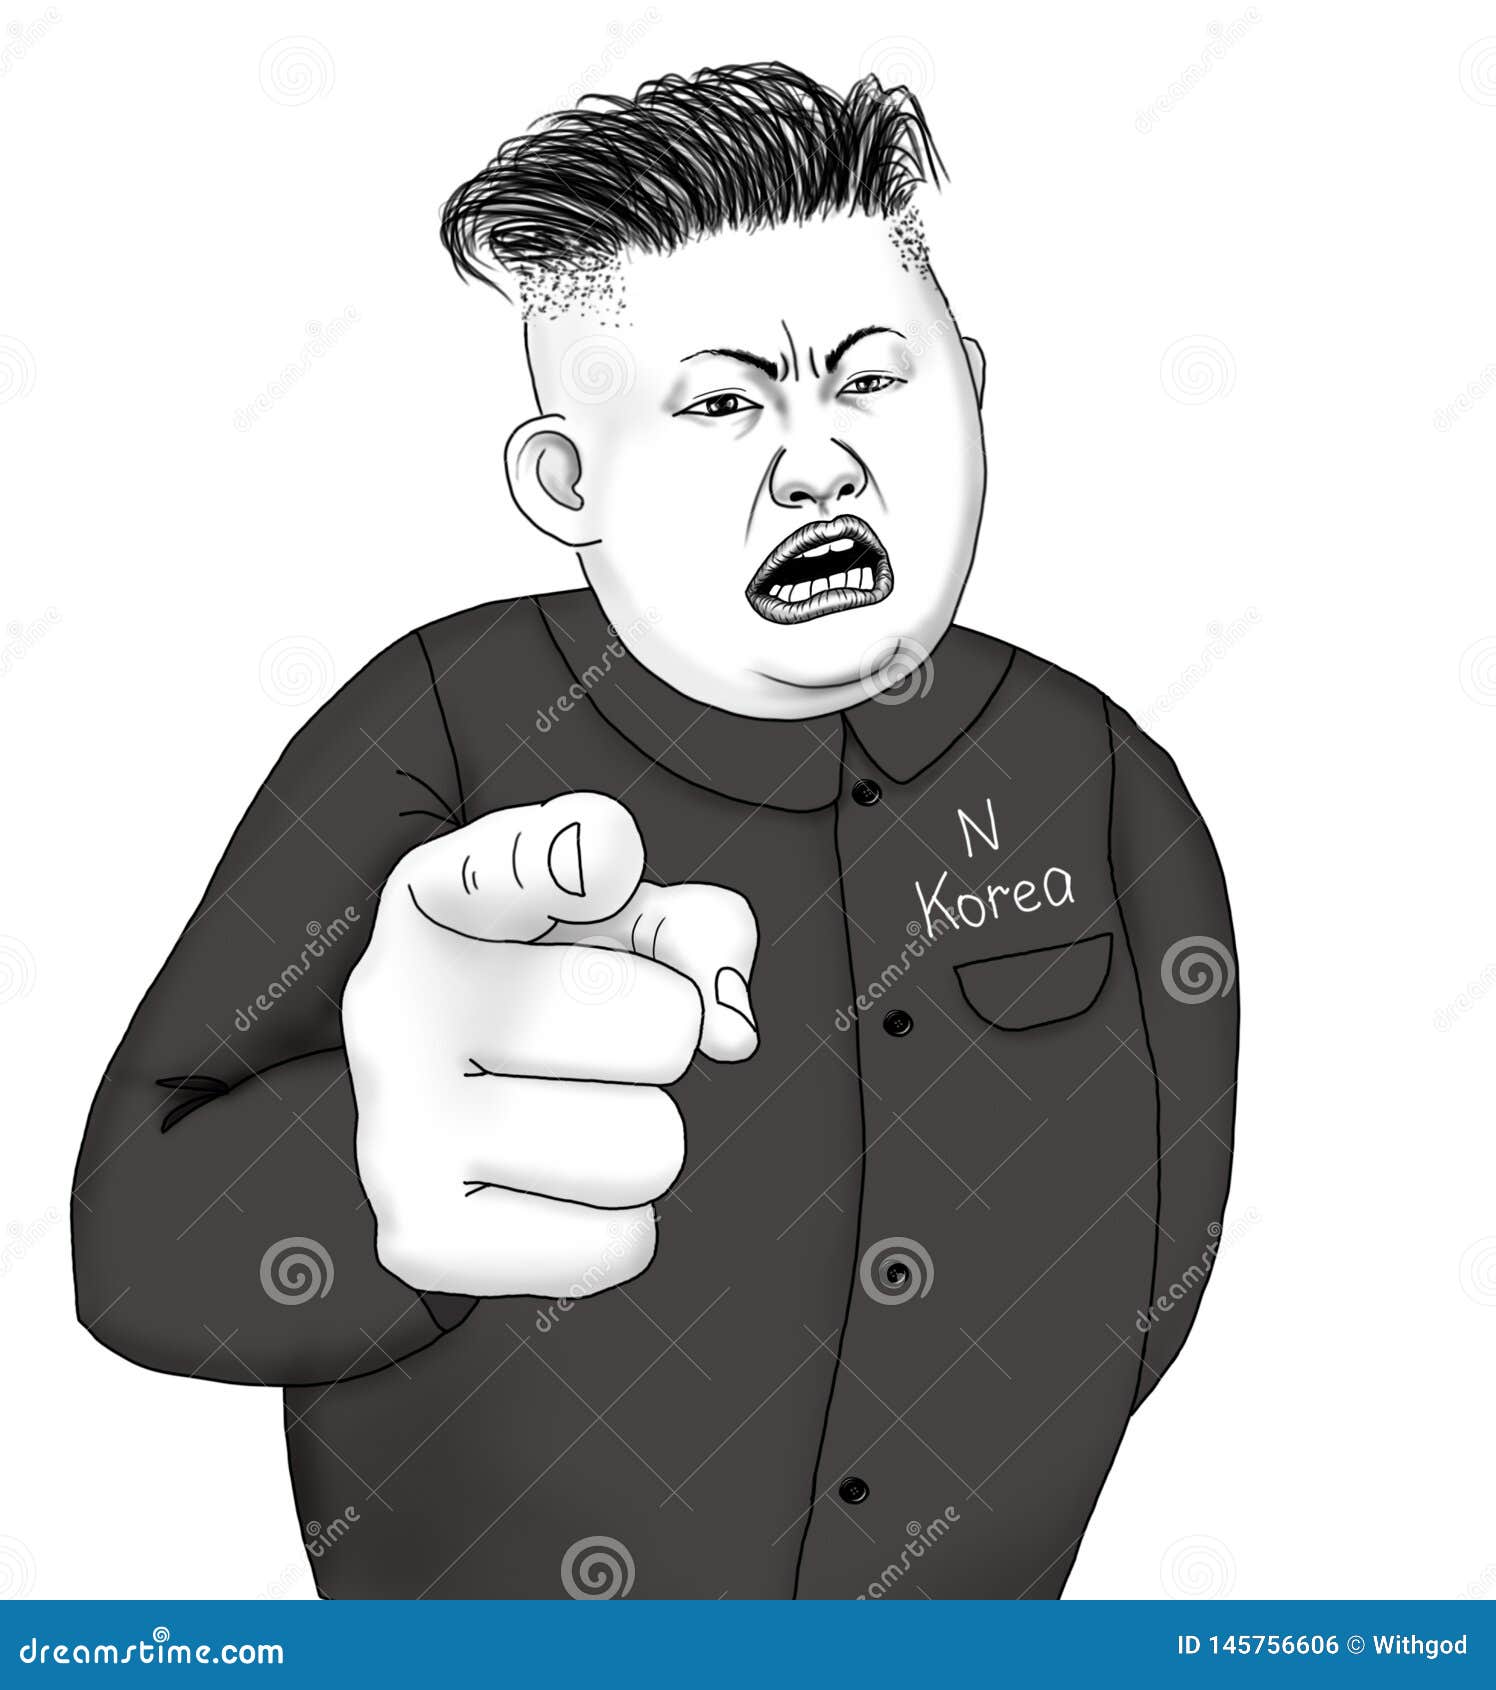 Cartoon Of North Korea President Editorial Photo - Illustration of ...